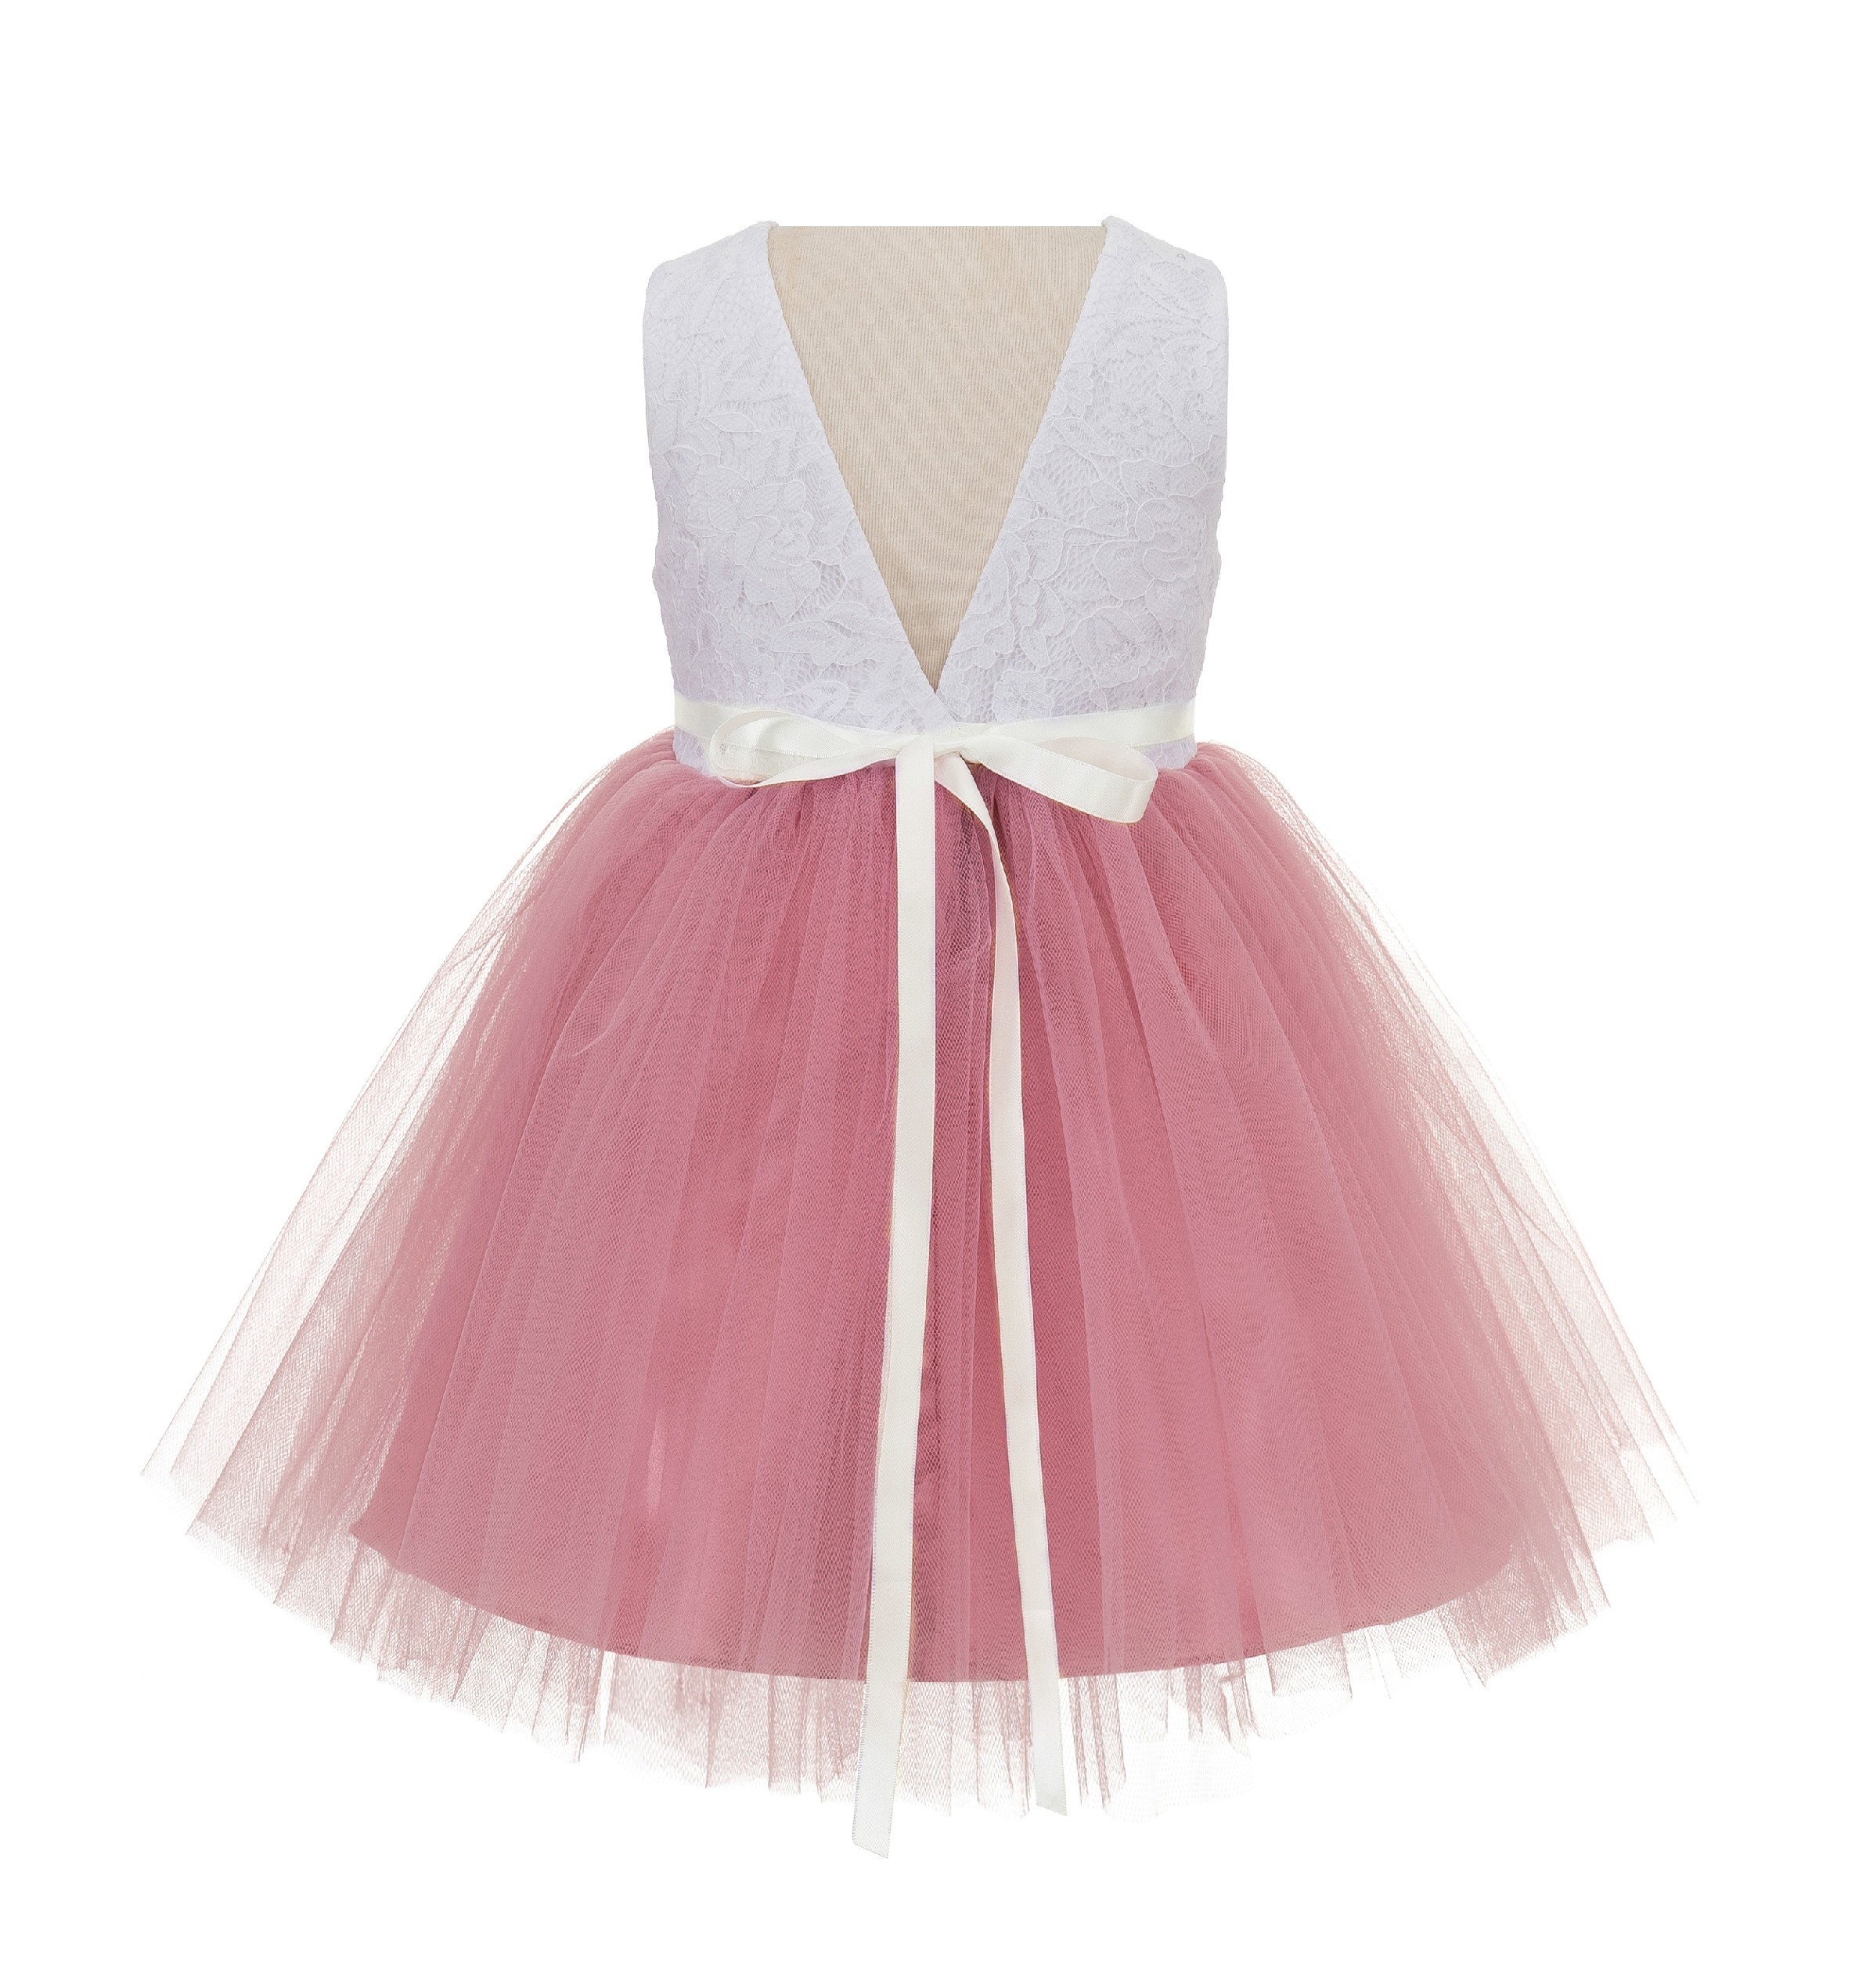 Dusty Rose / Ivory Backless Lace Flower Girl Dress Rhinestone 206R3